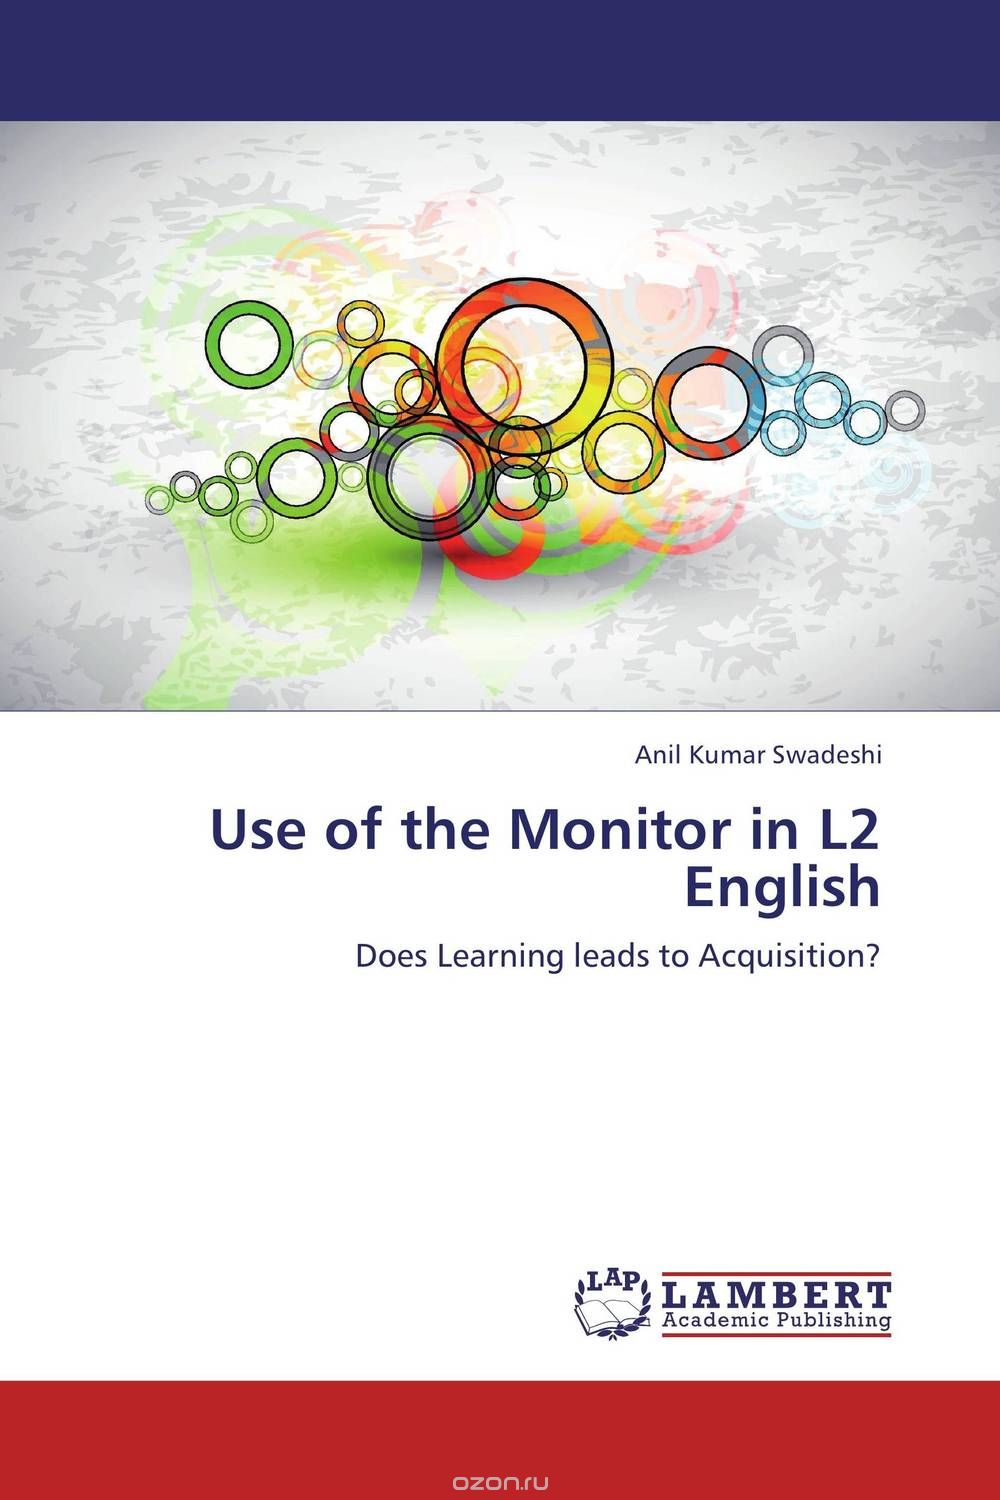 Скачать книгу "Use of the Monitor in L2 English"